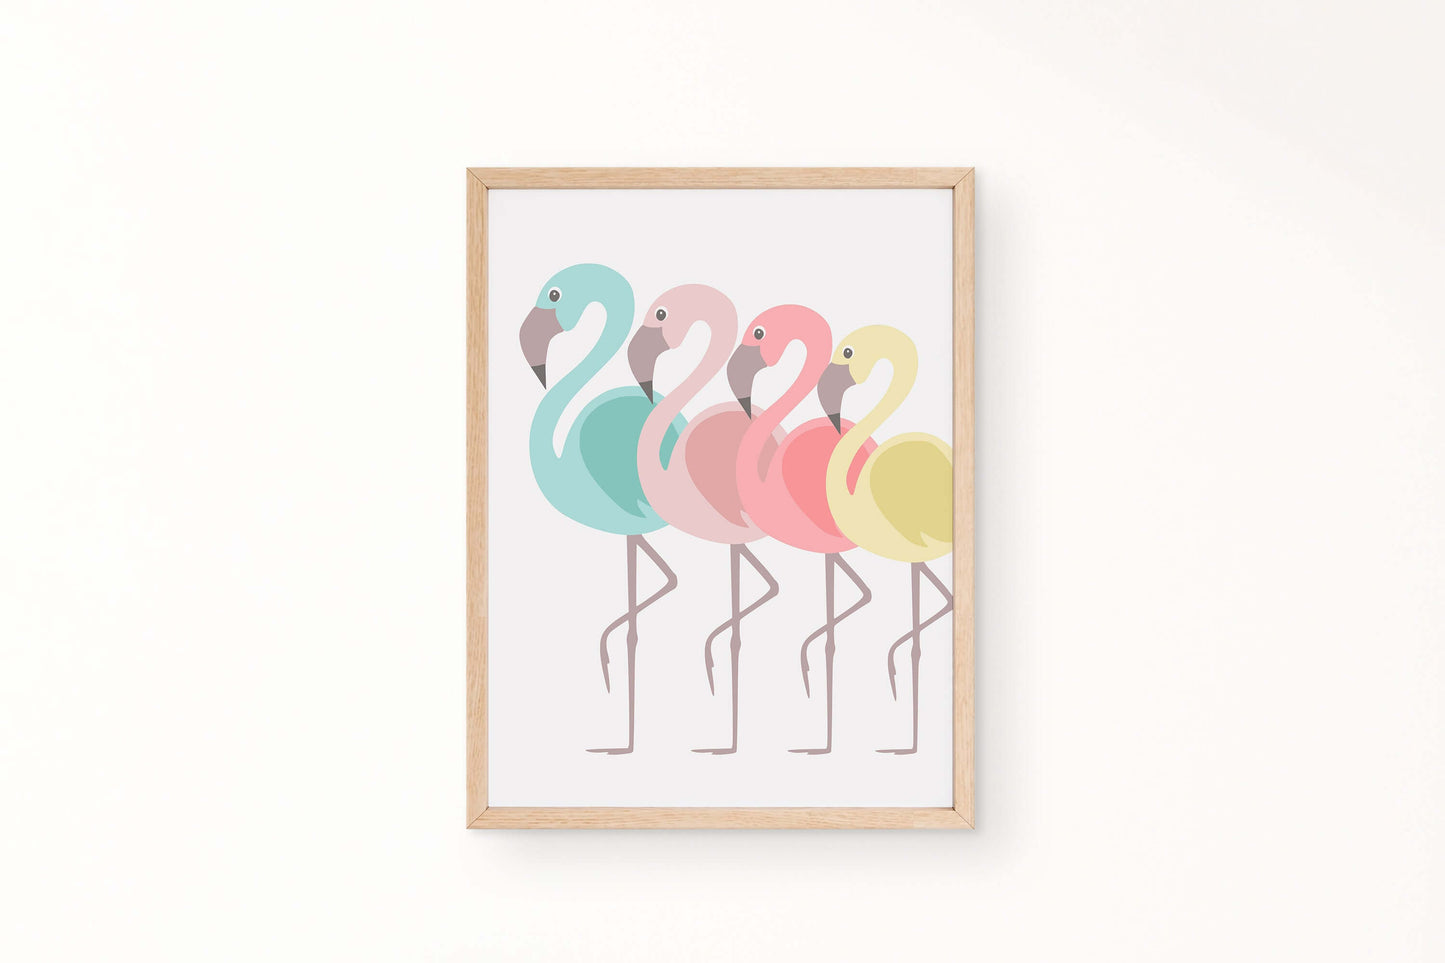 Flamingo Kids Print, Flamingos Poster, Girls Bedroom Print, Kids Wall Decor, Nursery Prints, Nursery Decor, Colourful Wall Art, Playroom